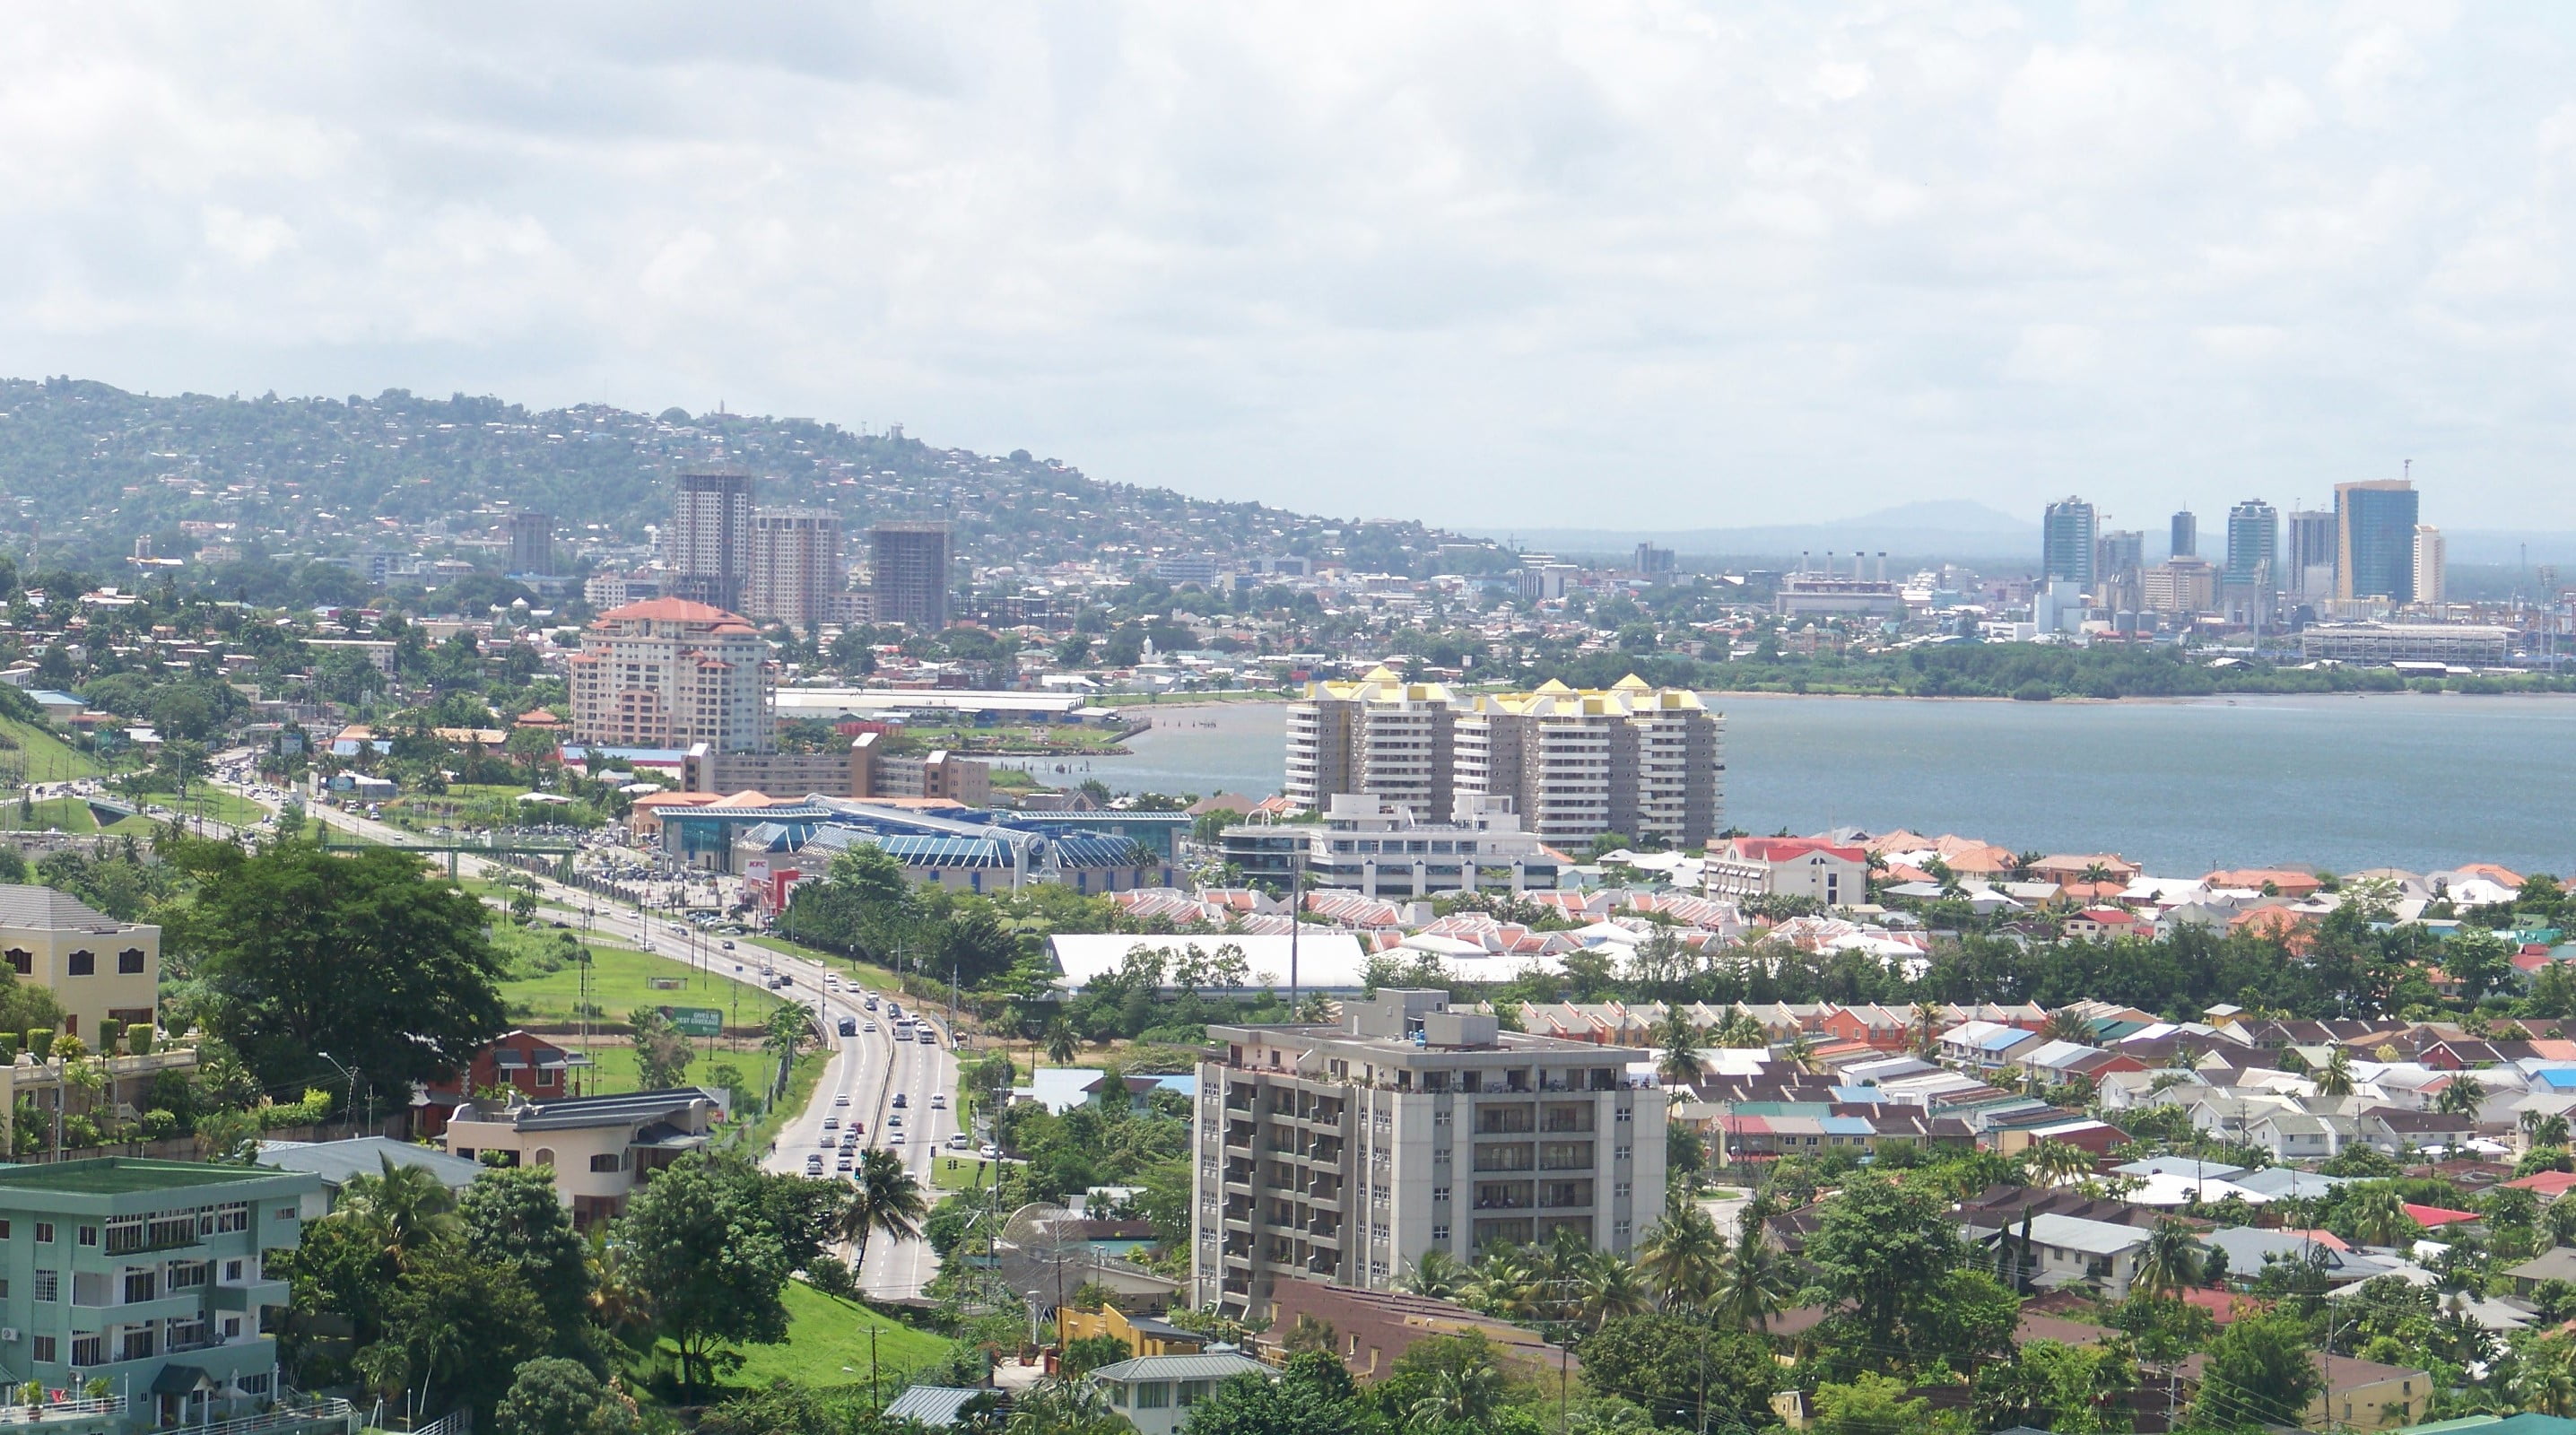 Skyline of Port of Spain, Trinidad & Tobago